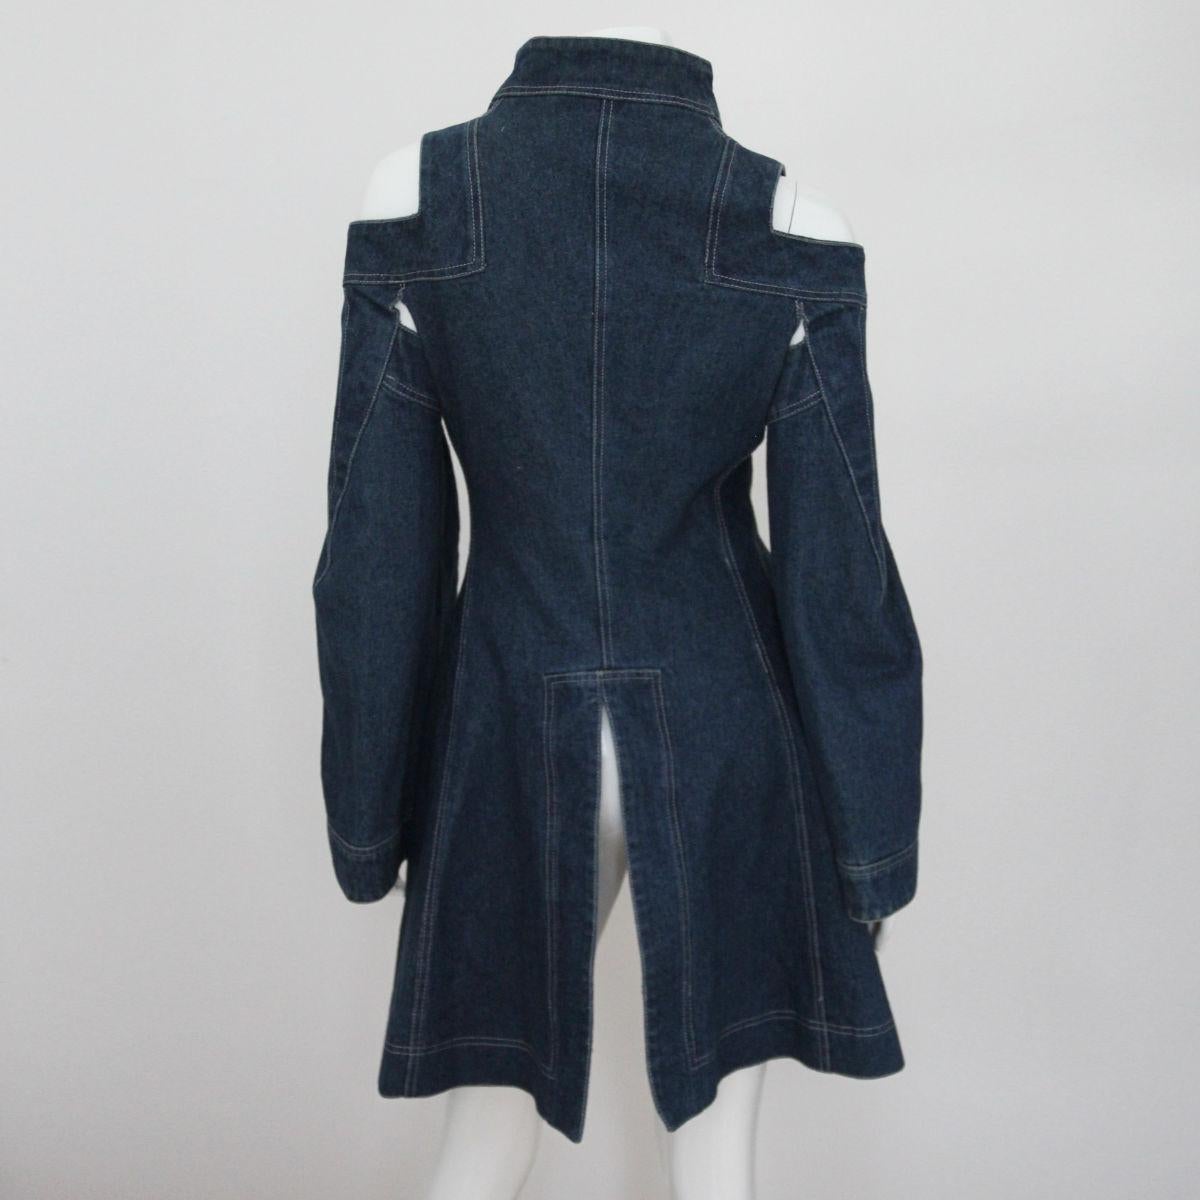 blue tailcoat